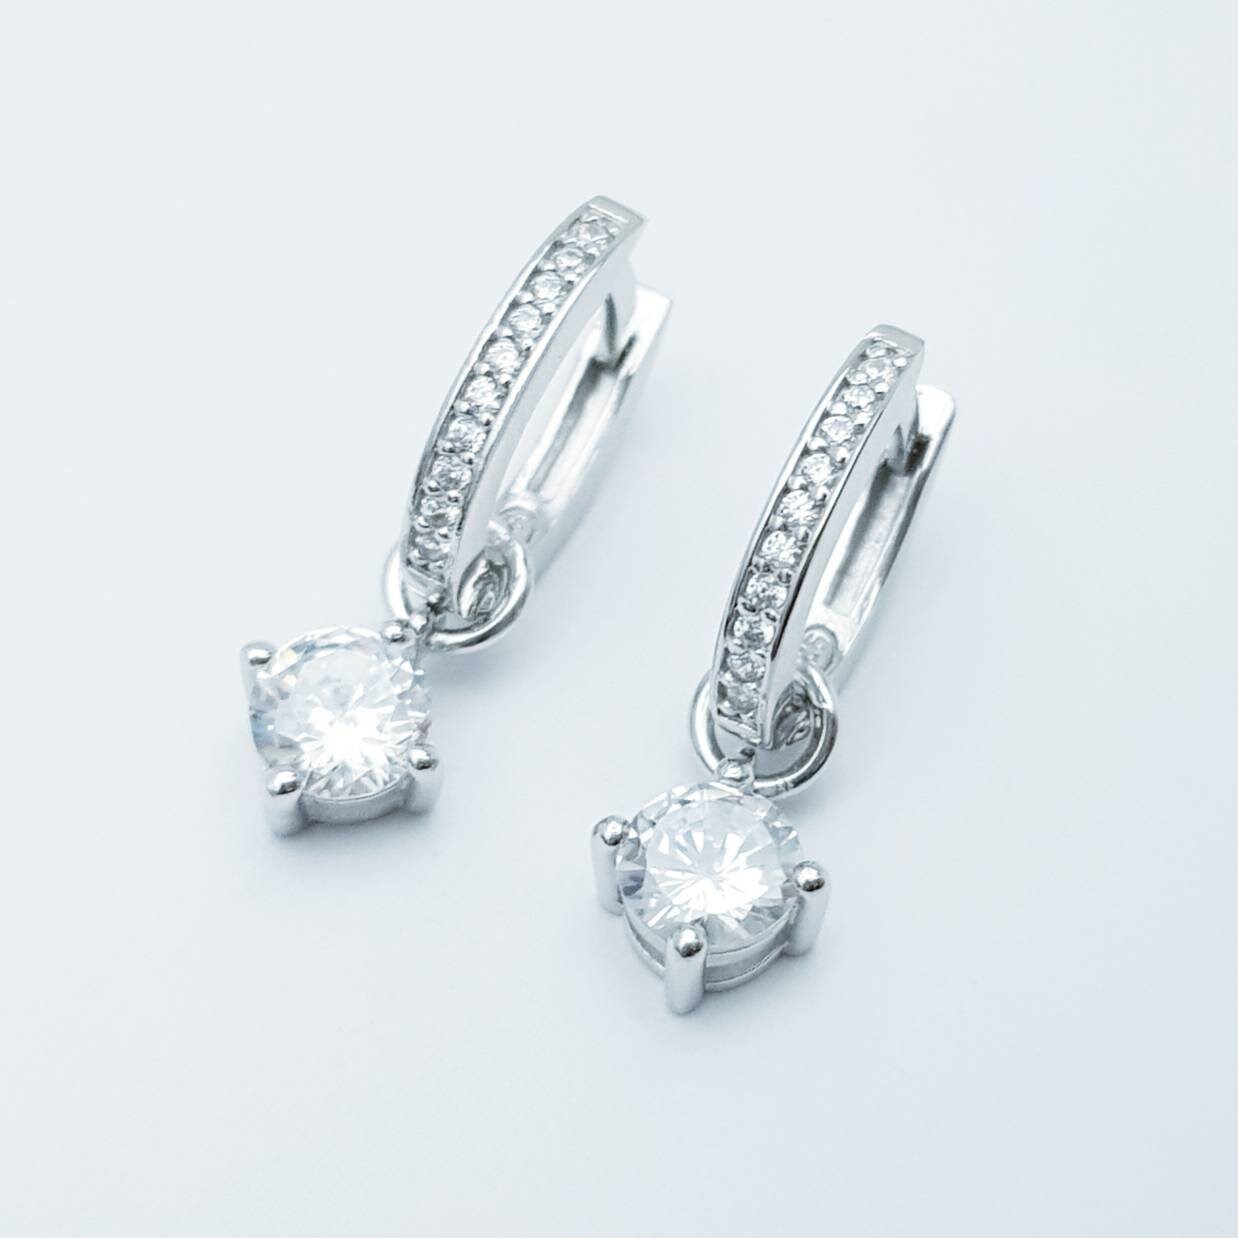 Dainty silver hoop earrings with removable solitaire drop, two earrings in one, faux diamond minimal huggie earrings